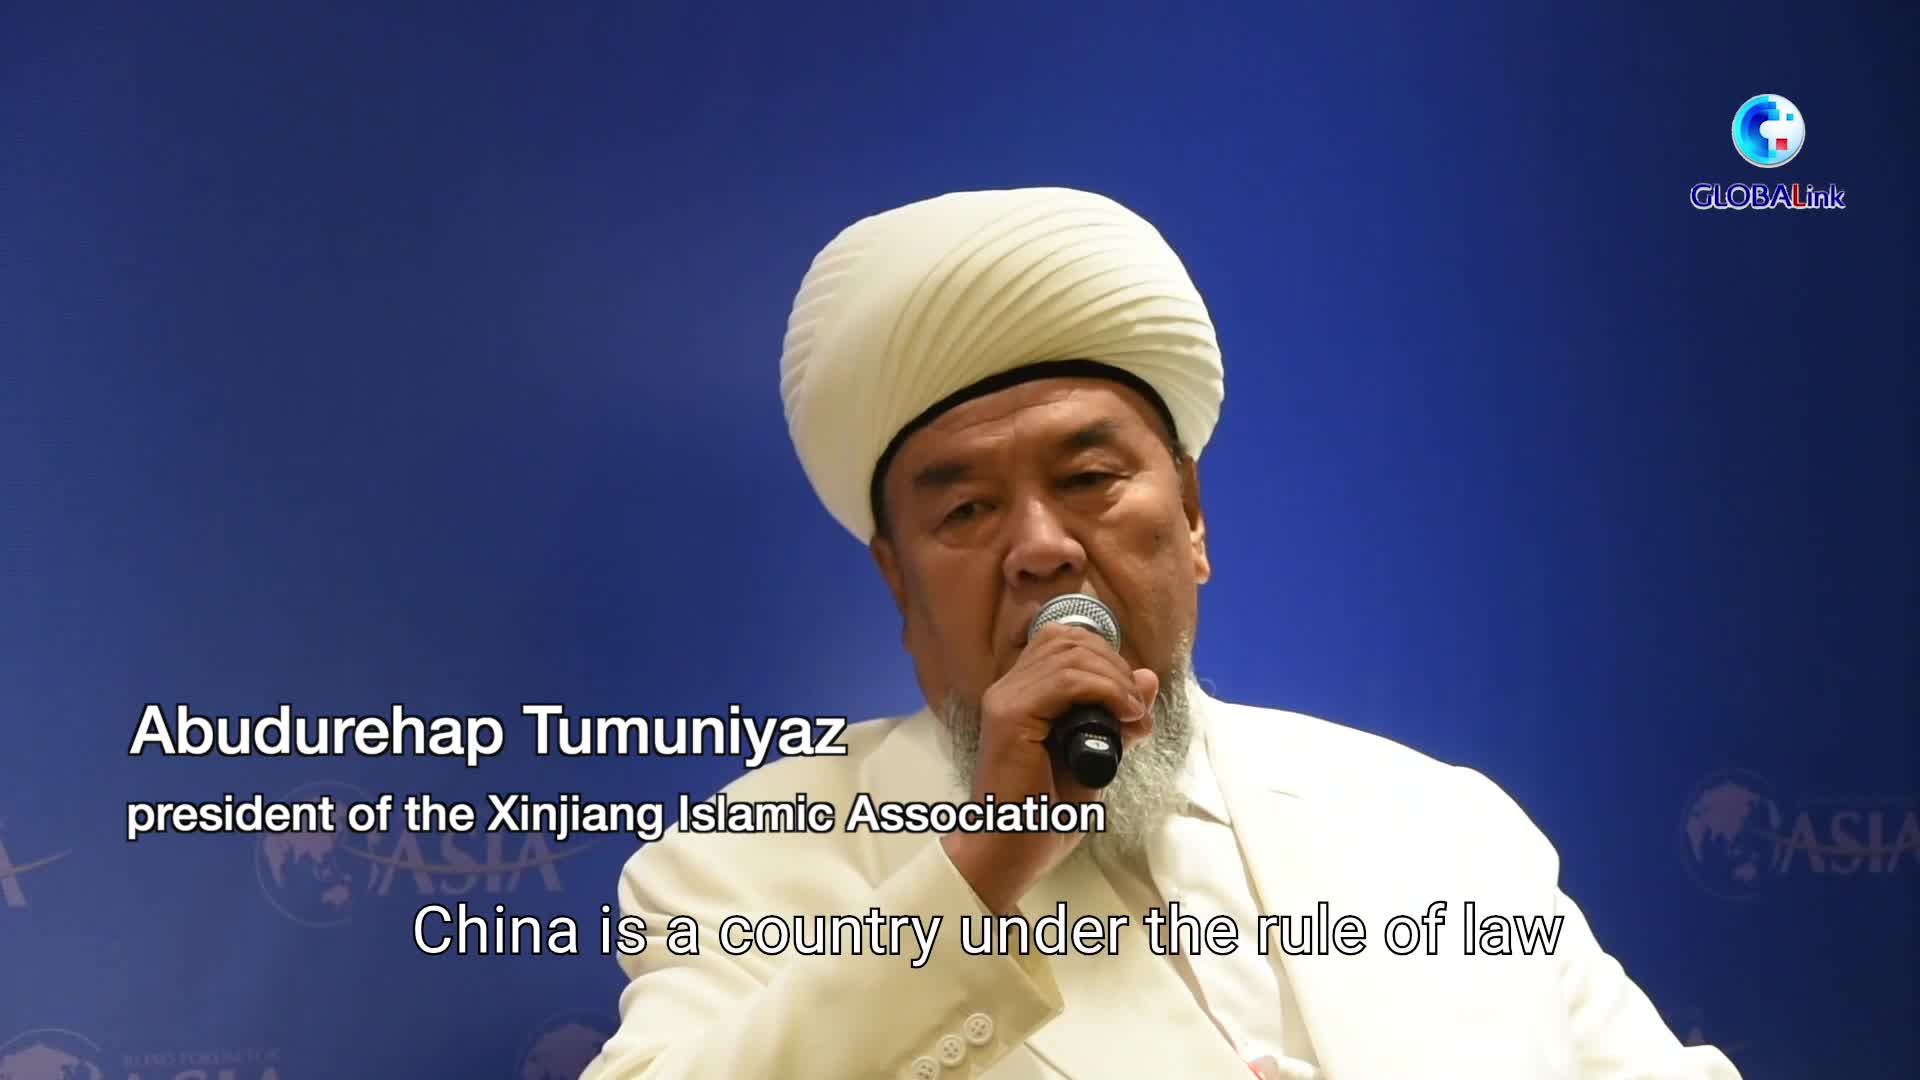 GLOBALink | BFA: President of Xinjiang Islamic Association on religious freedom in Xinjiang